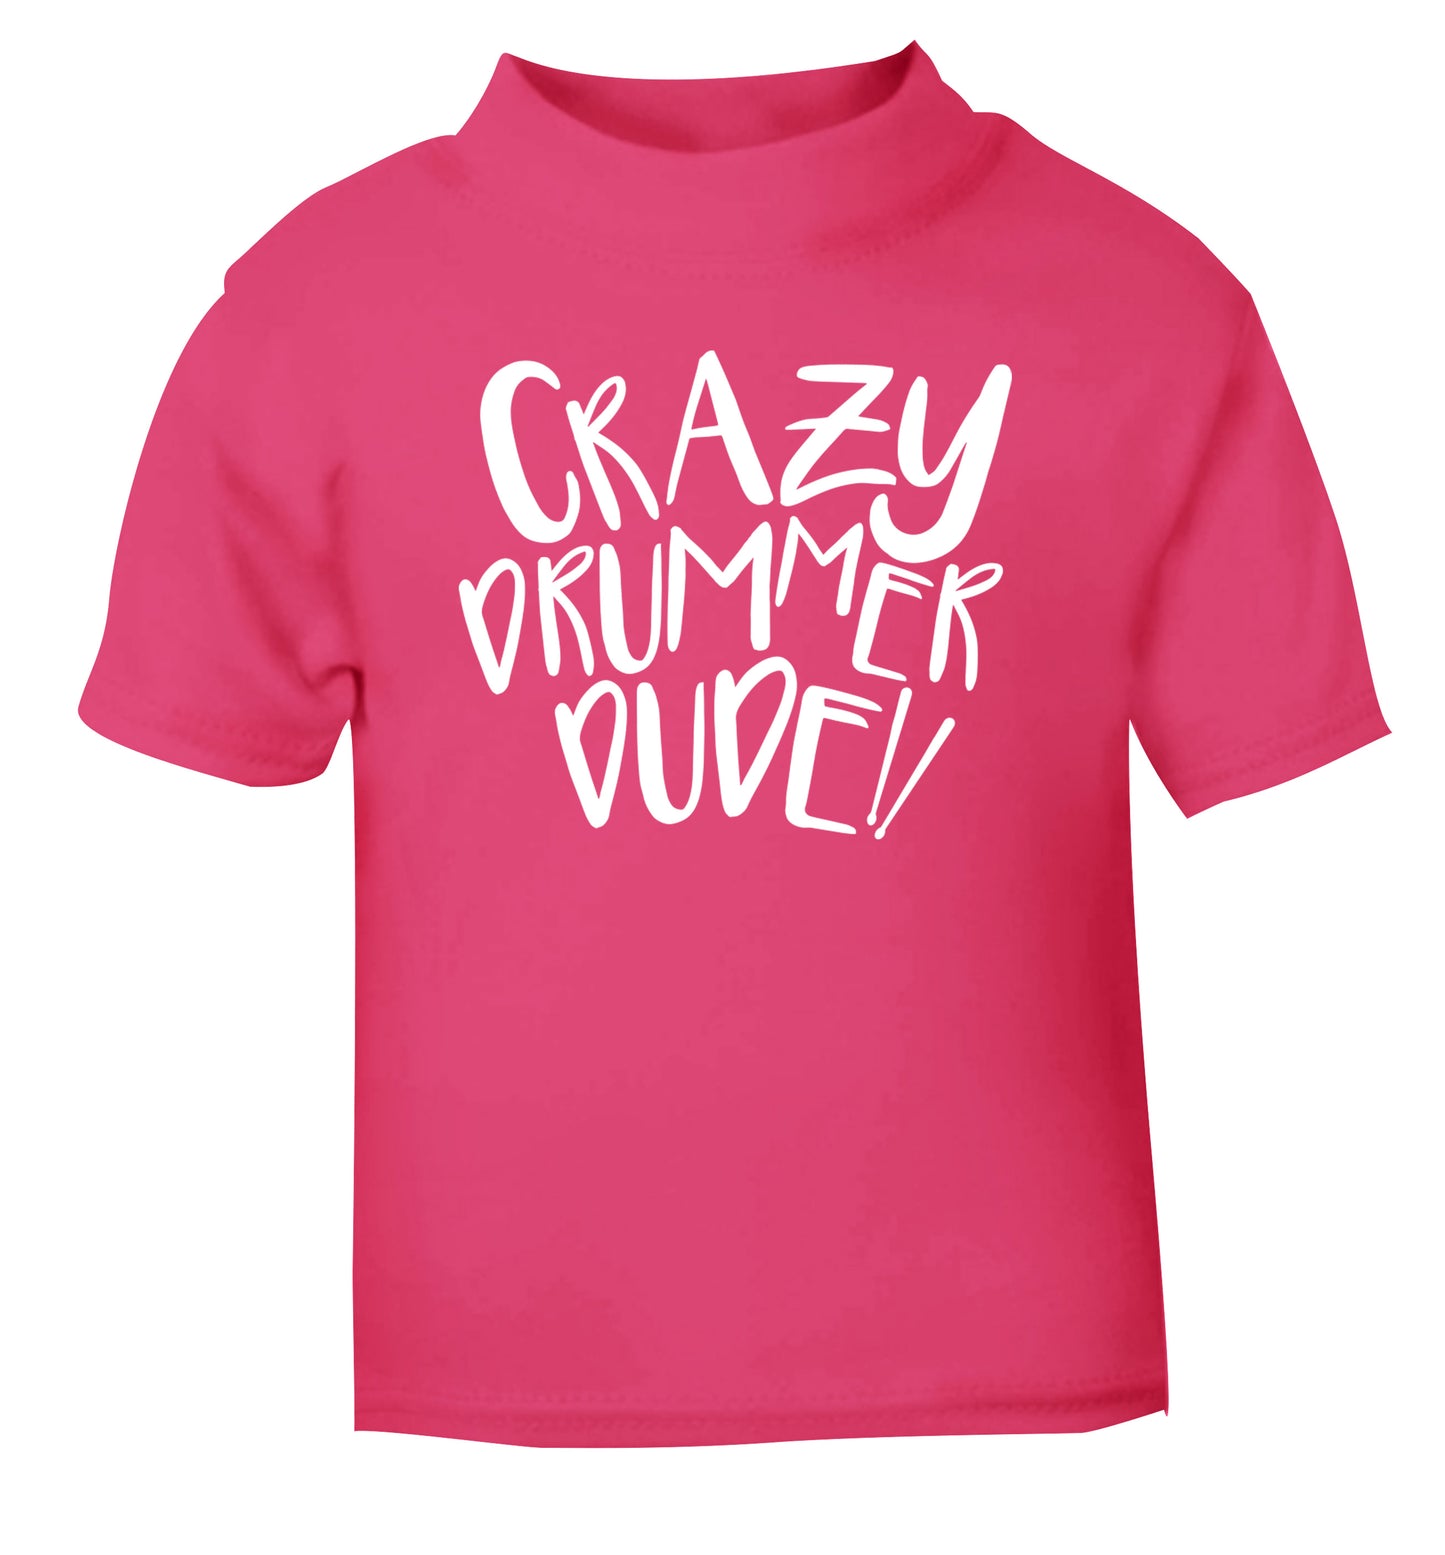 Crazy drummer dude pink Baby Toddler Tshirt 2 Years